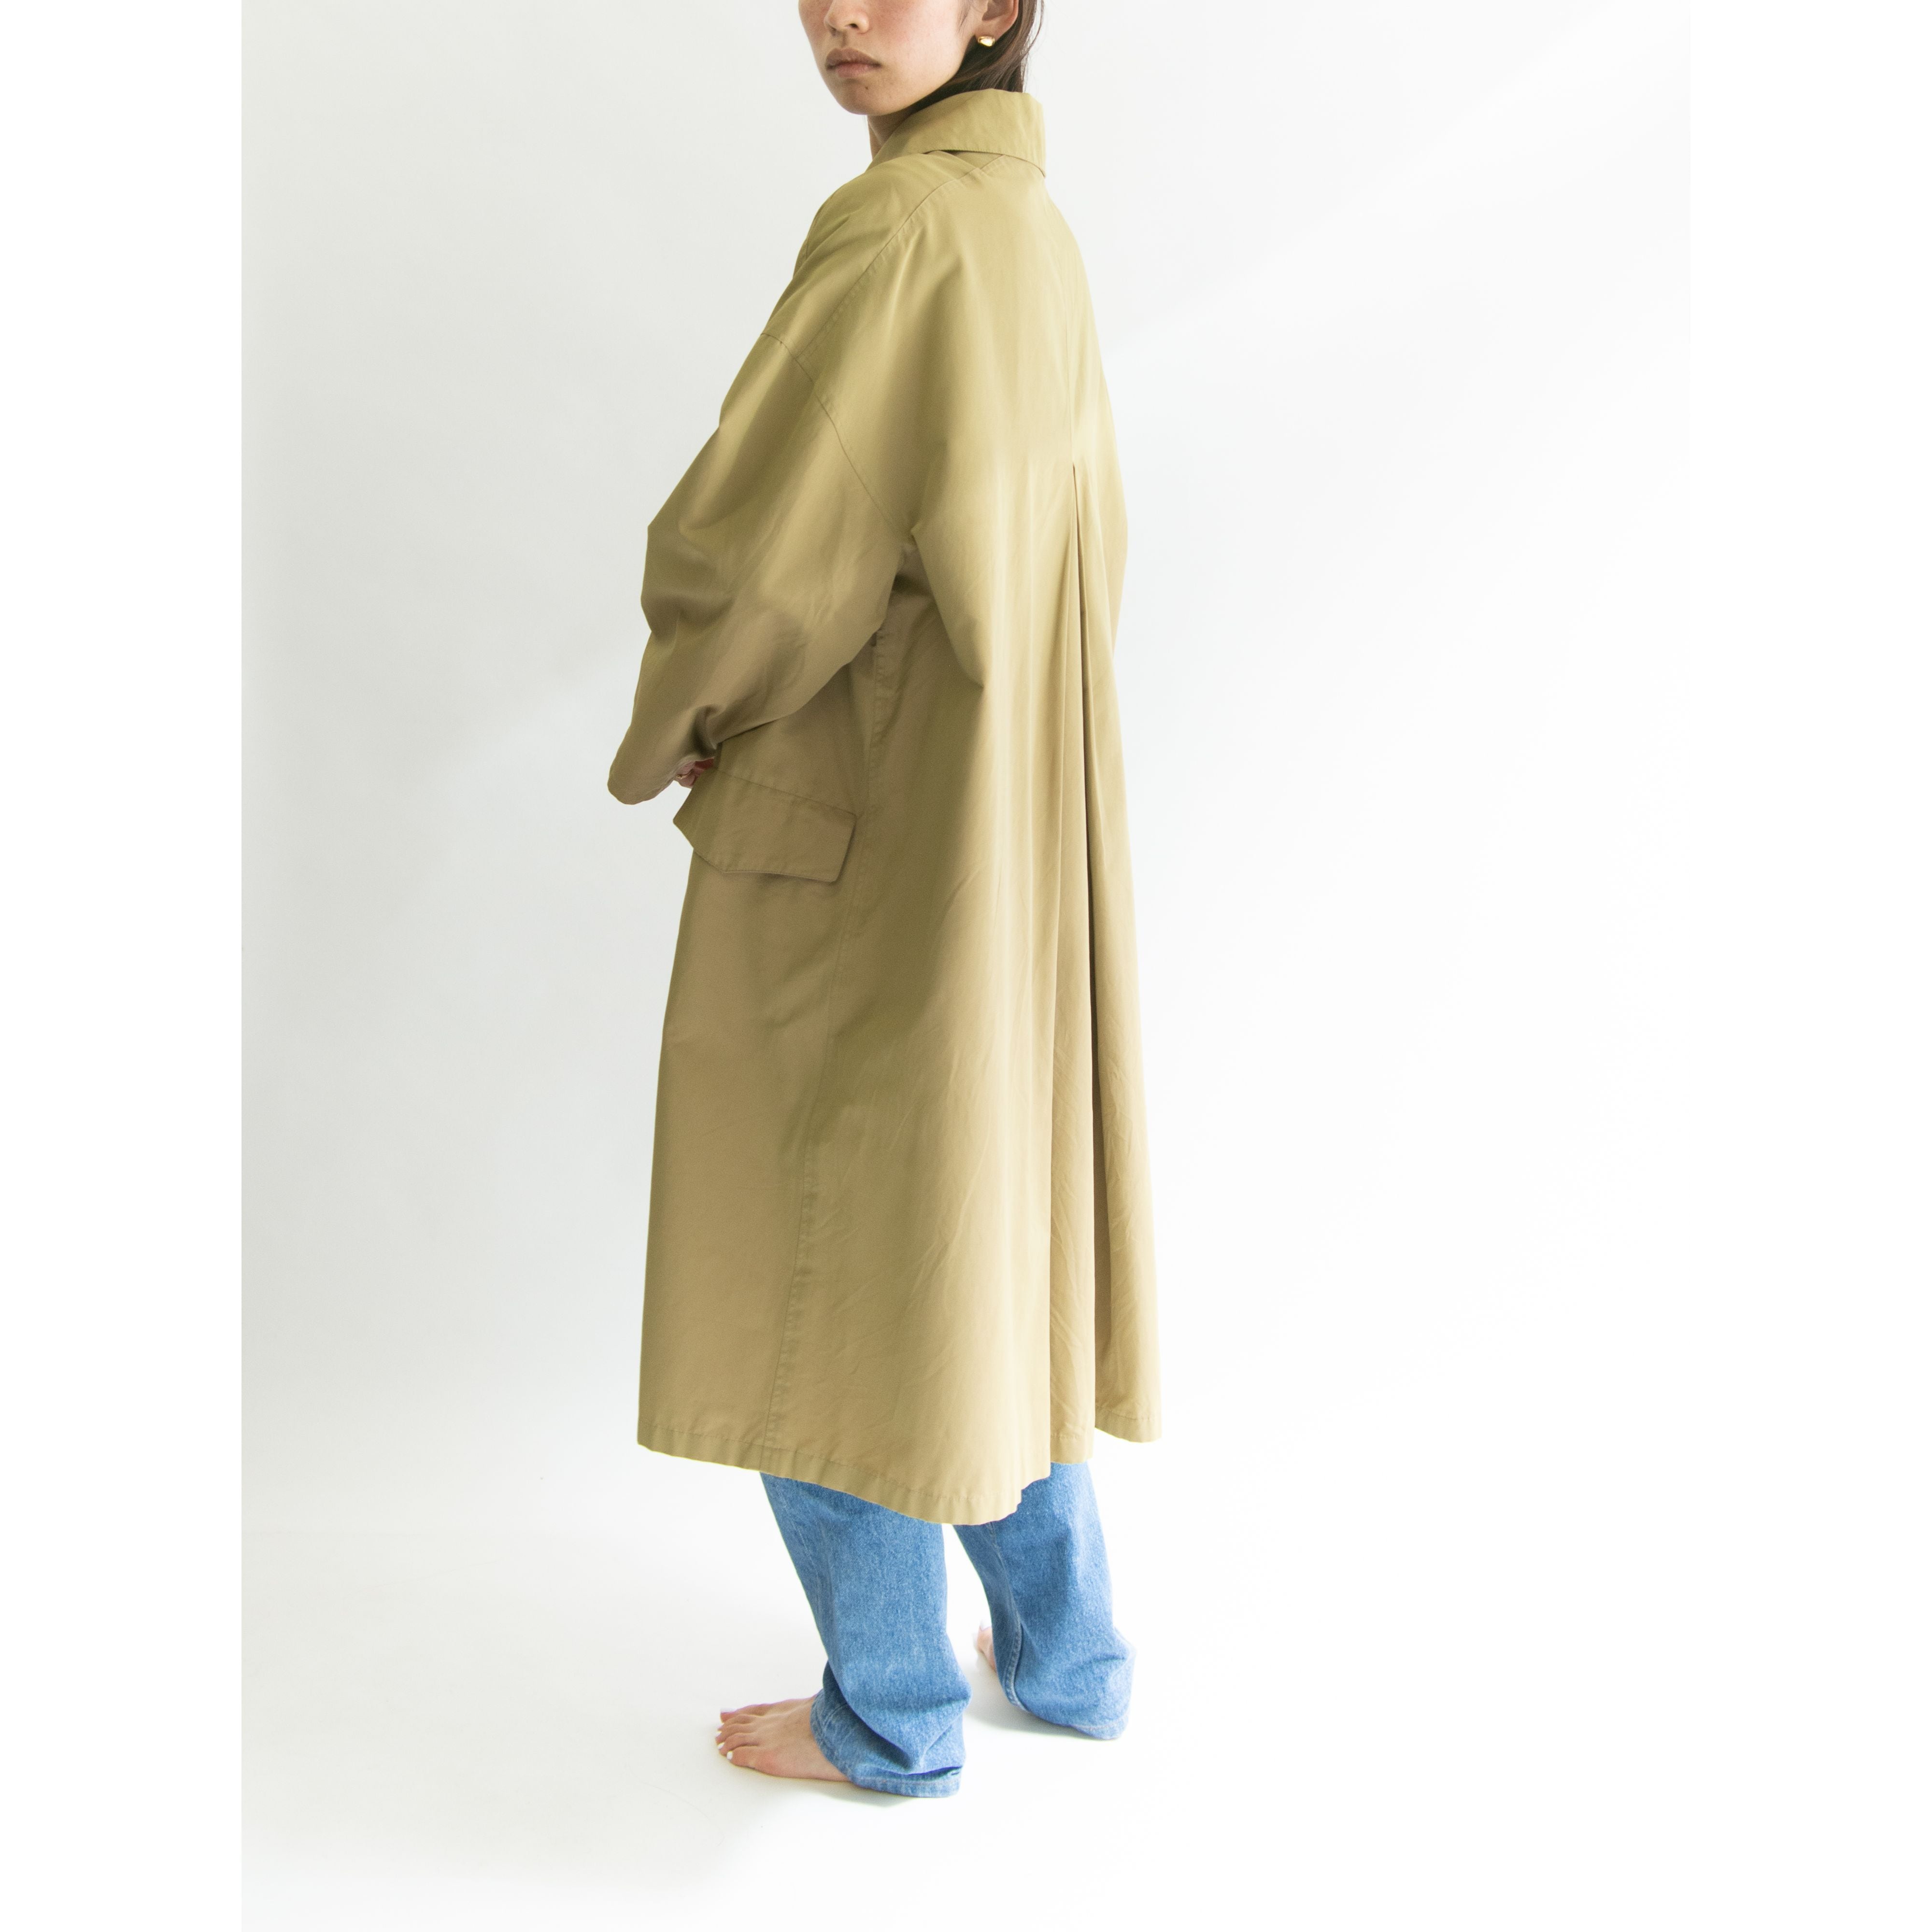 Salvatore Ferragamo】Made in Italy oversized soutien collar coat 